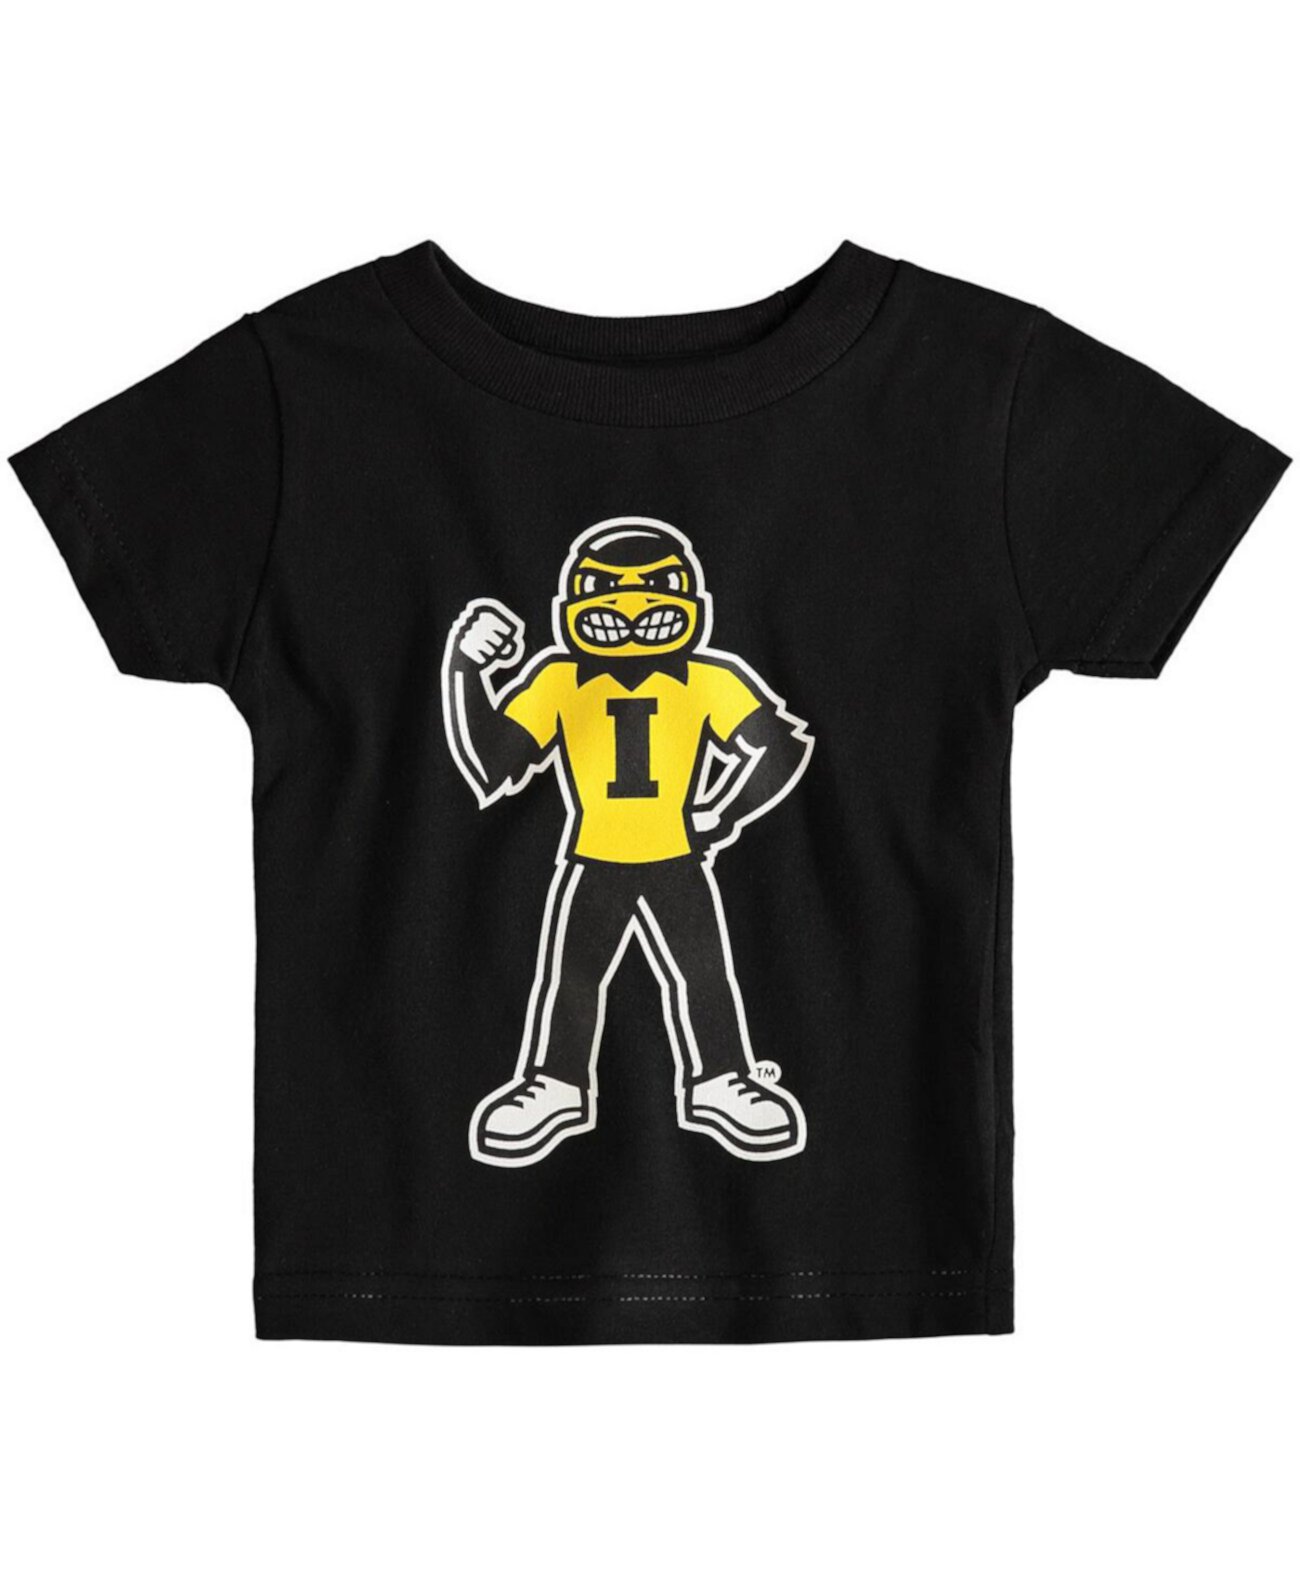 Черная футболка с большим логотипом Iowa Hawkeyes для мальчиков и девочек для младенцев Two Feet Ahead